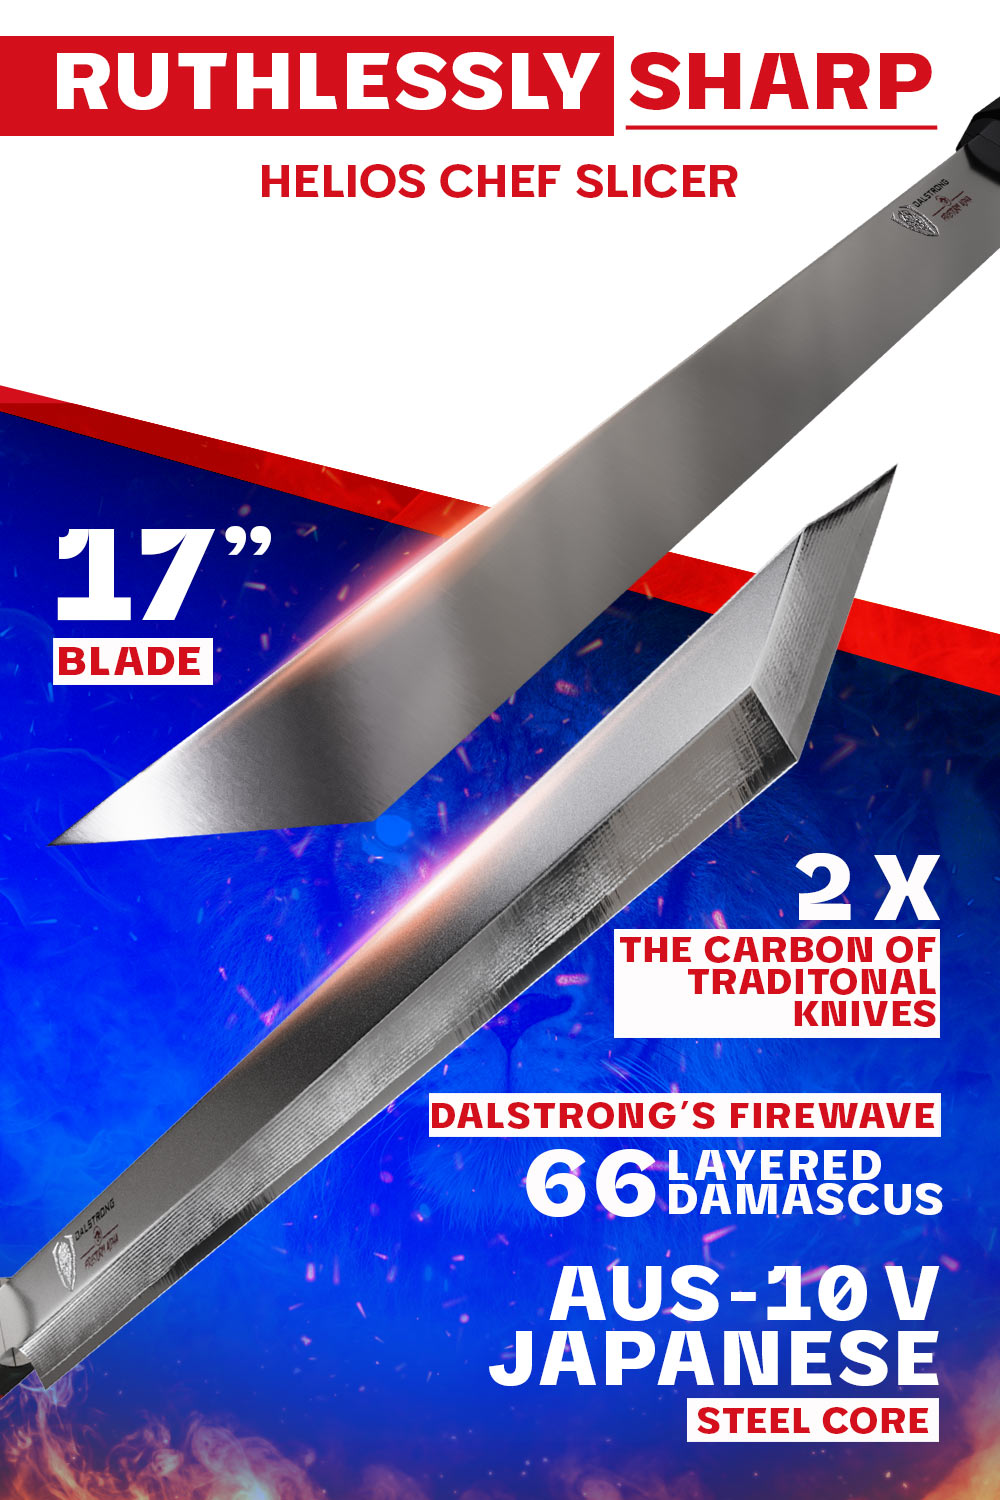 Dalstrong firestorm alpha series 17 inch helios slicer knife featuring it's razor sharp blade.